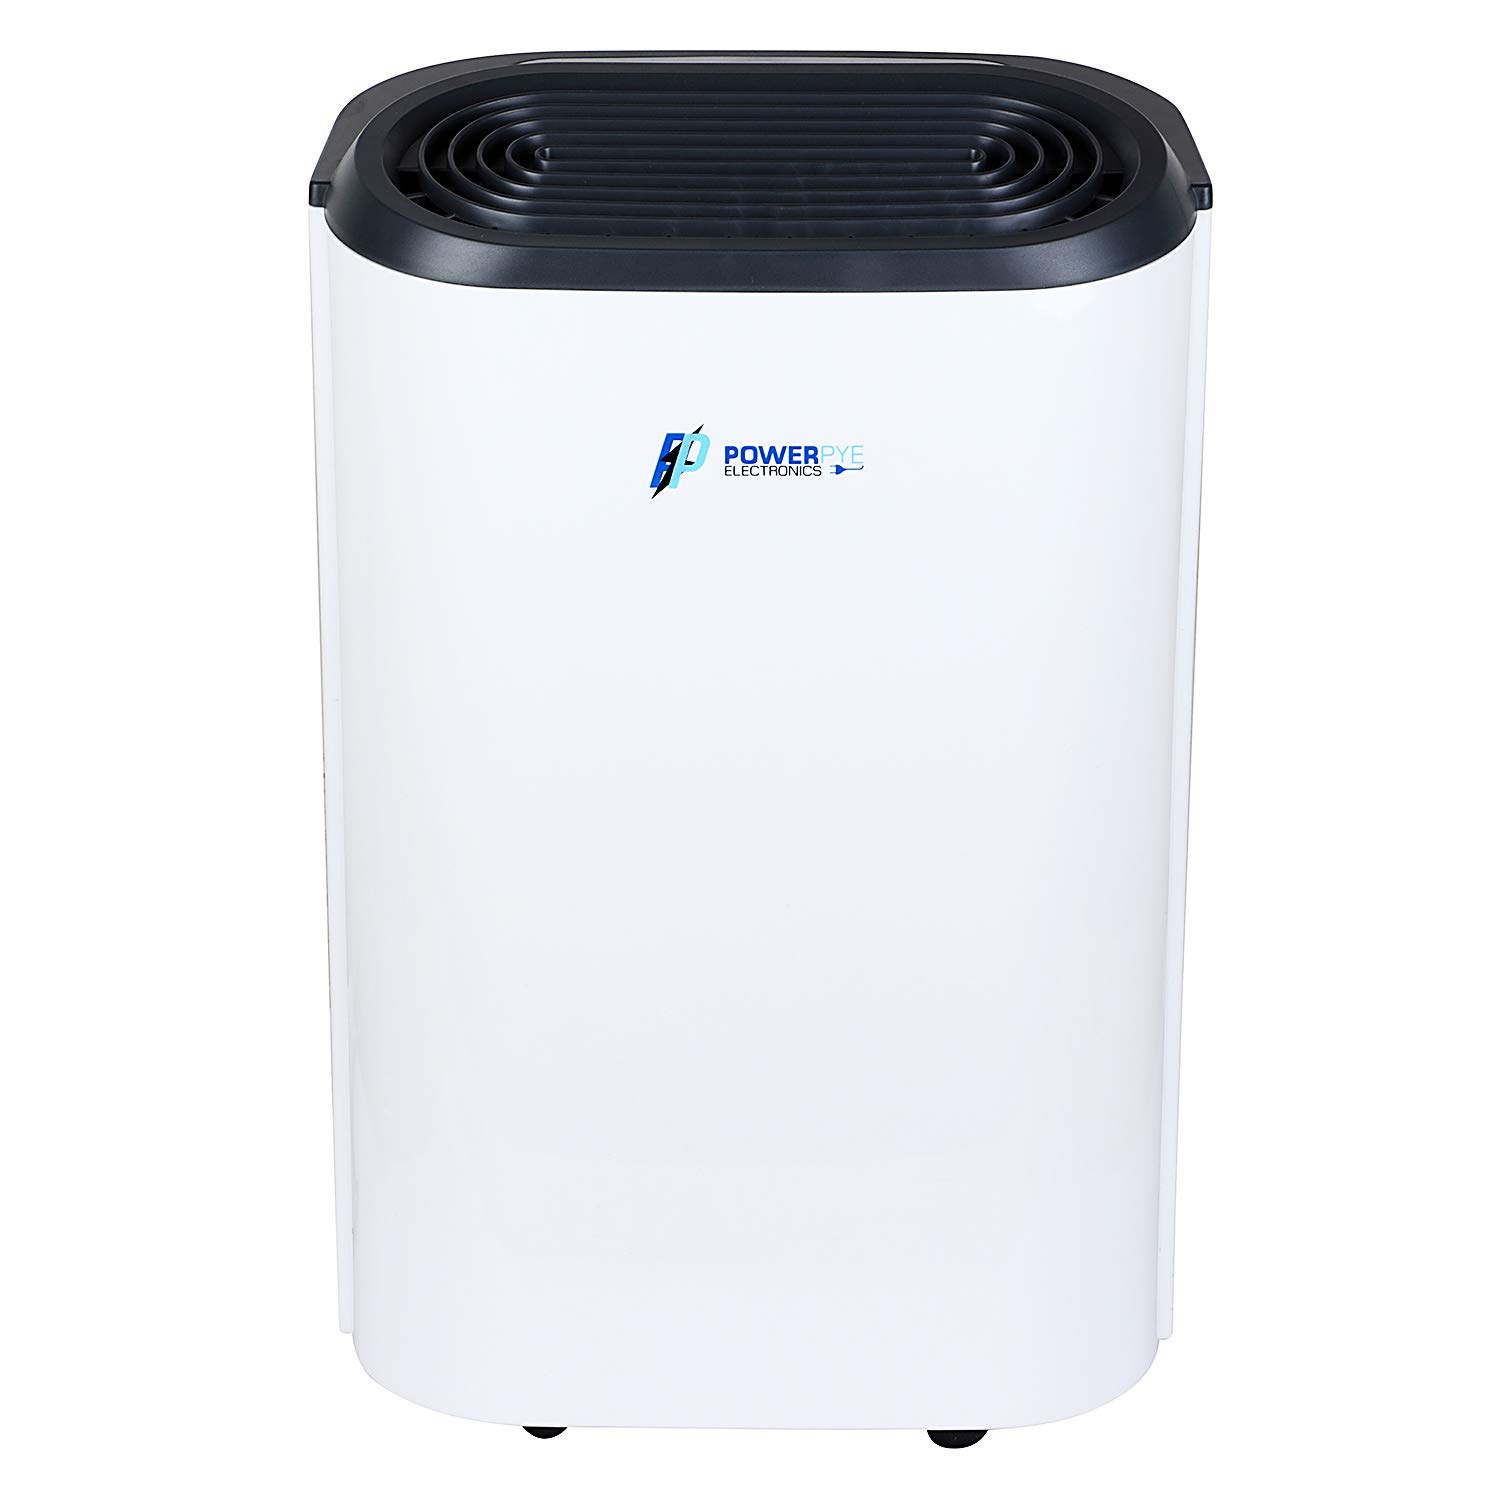 small dehumidifier - Power Pye's ABS 3 In 1 Dehumidifier